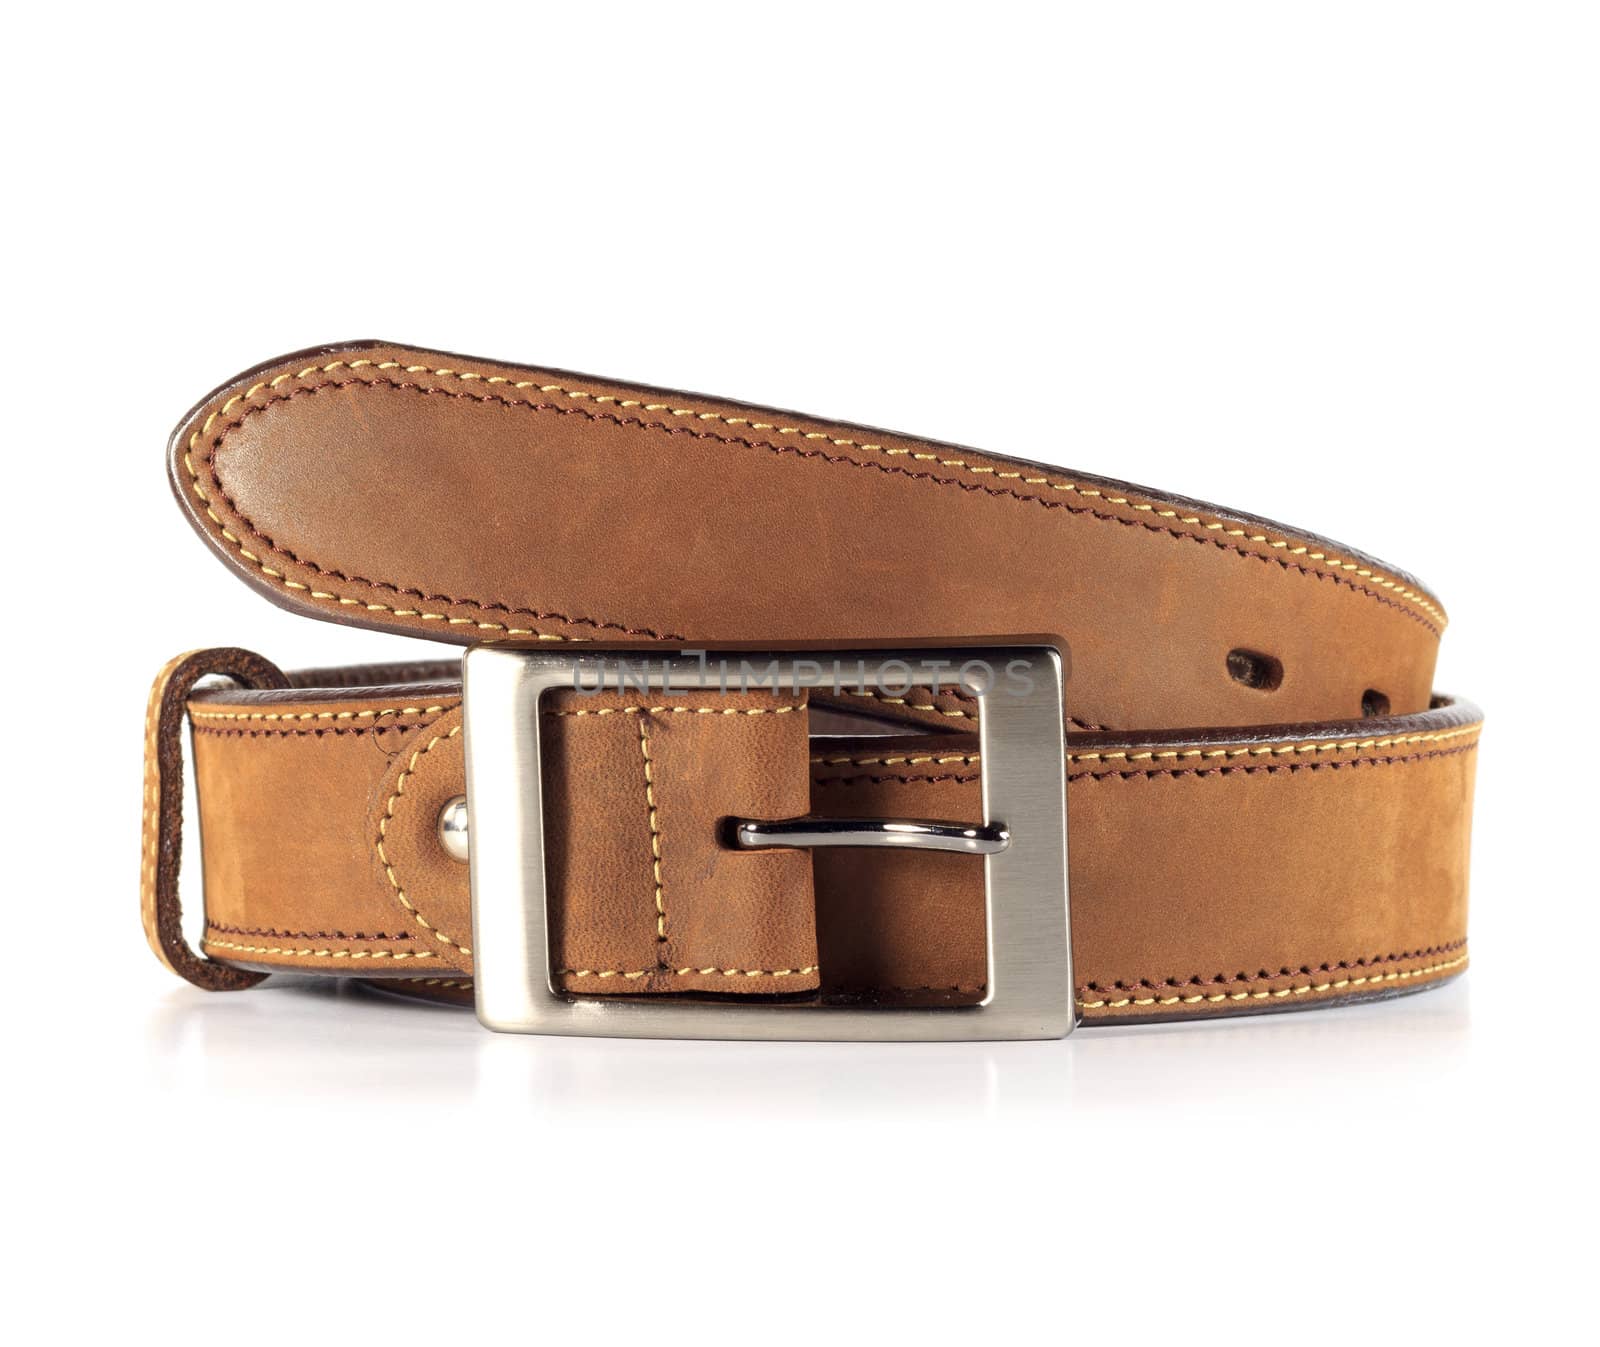 Leather belt for men on white background.